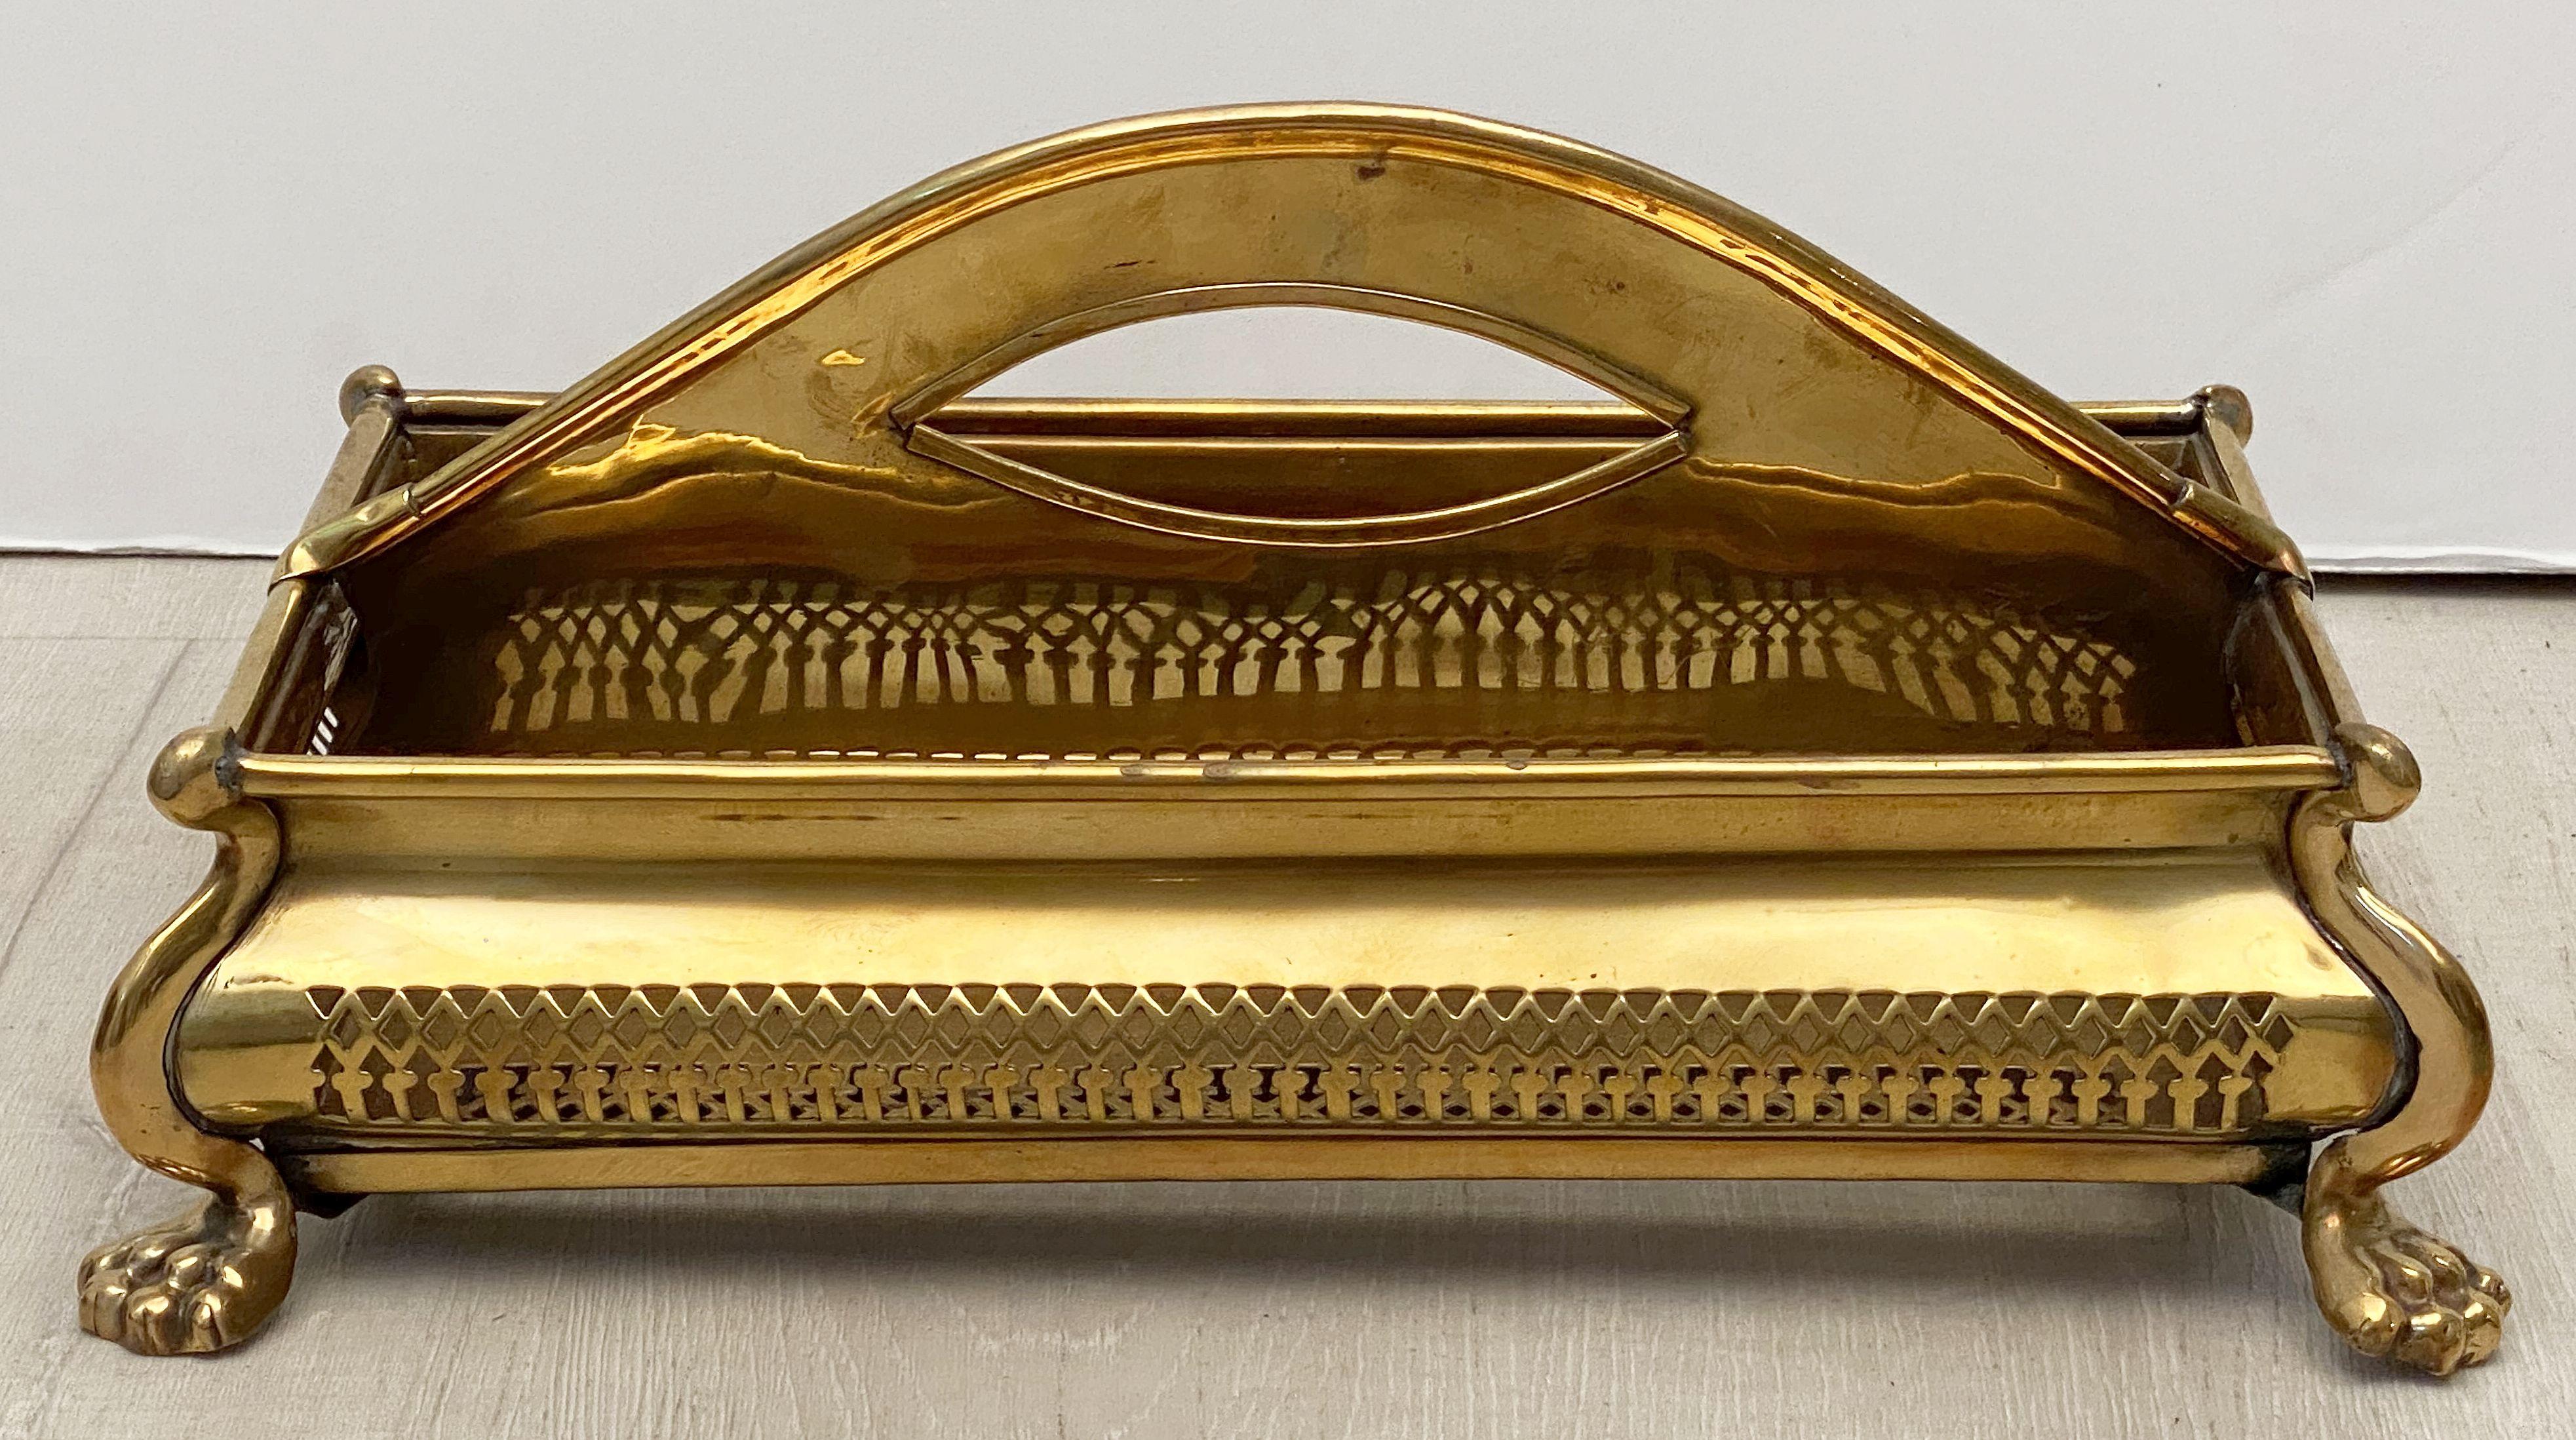 19th Century English Rectangular Cutlery Tray of Brass on Lion's Paw Feet